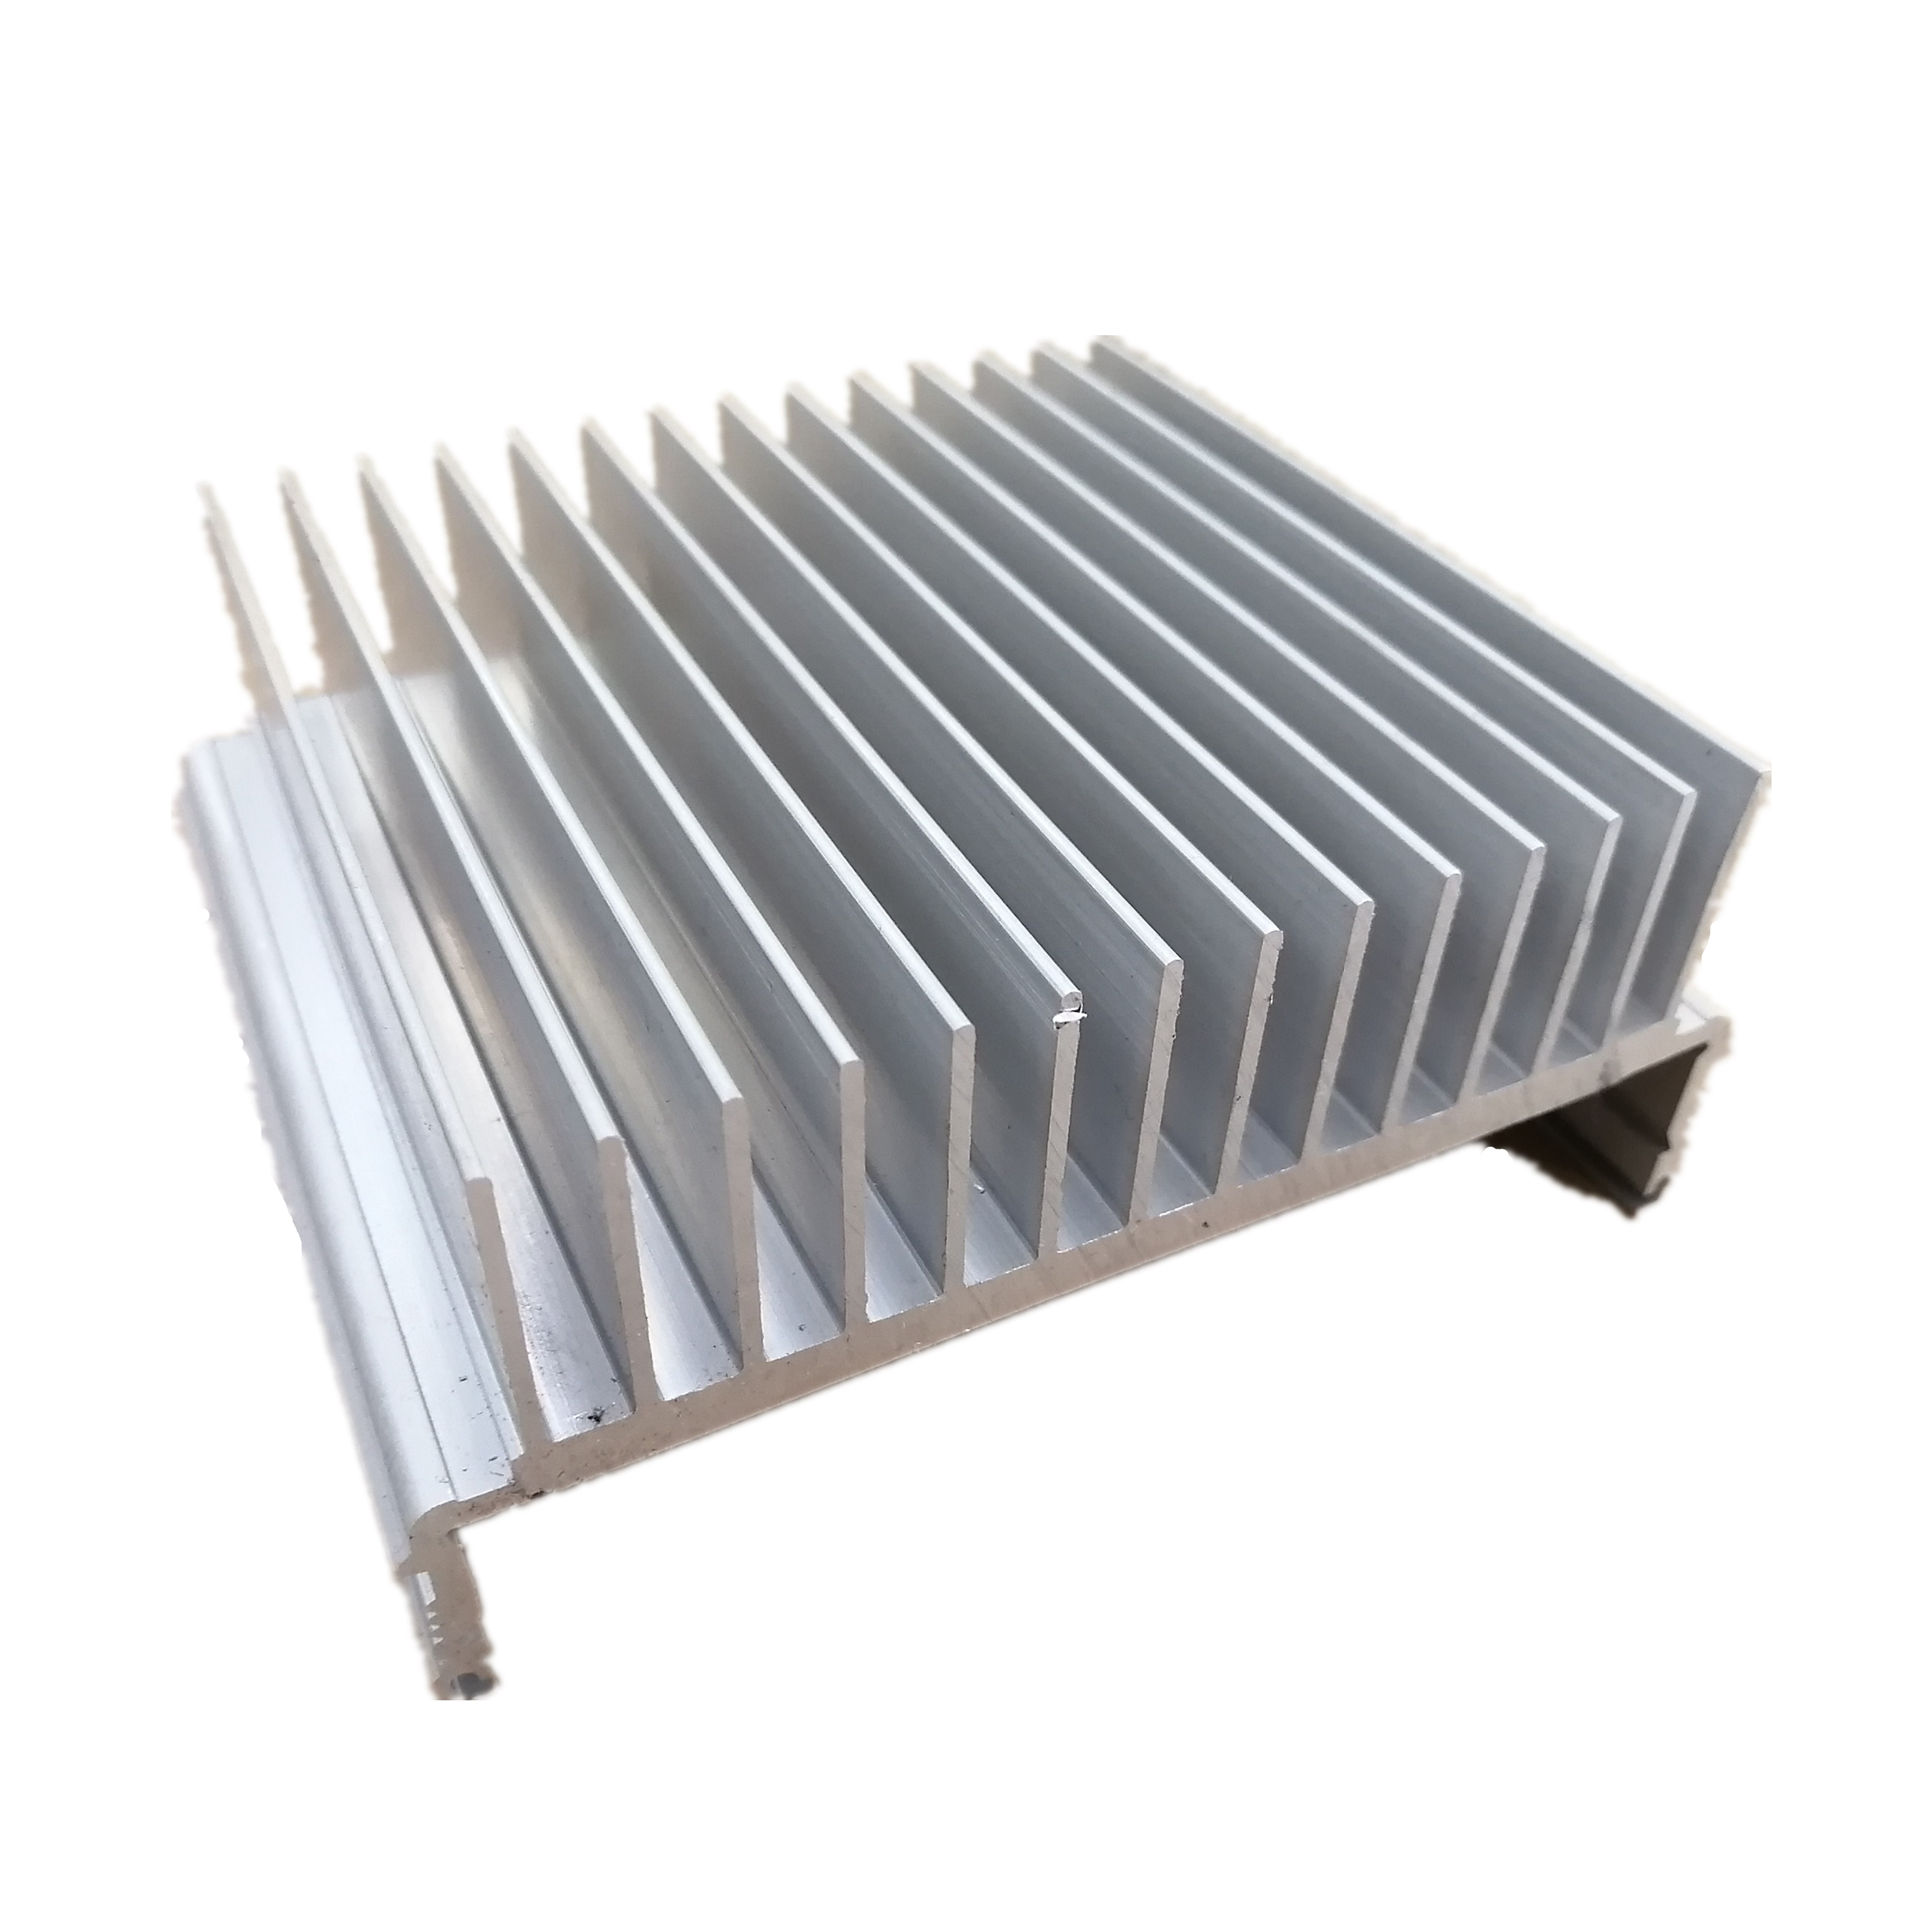 Best 10.0mm 6061 Aluminum Heatsink Extrusion Profiles For Machine wholesale